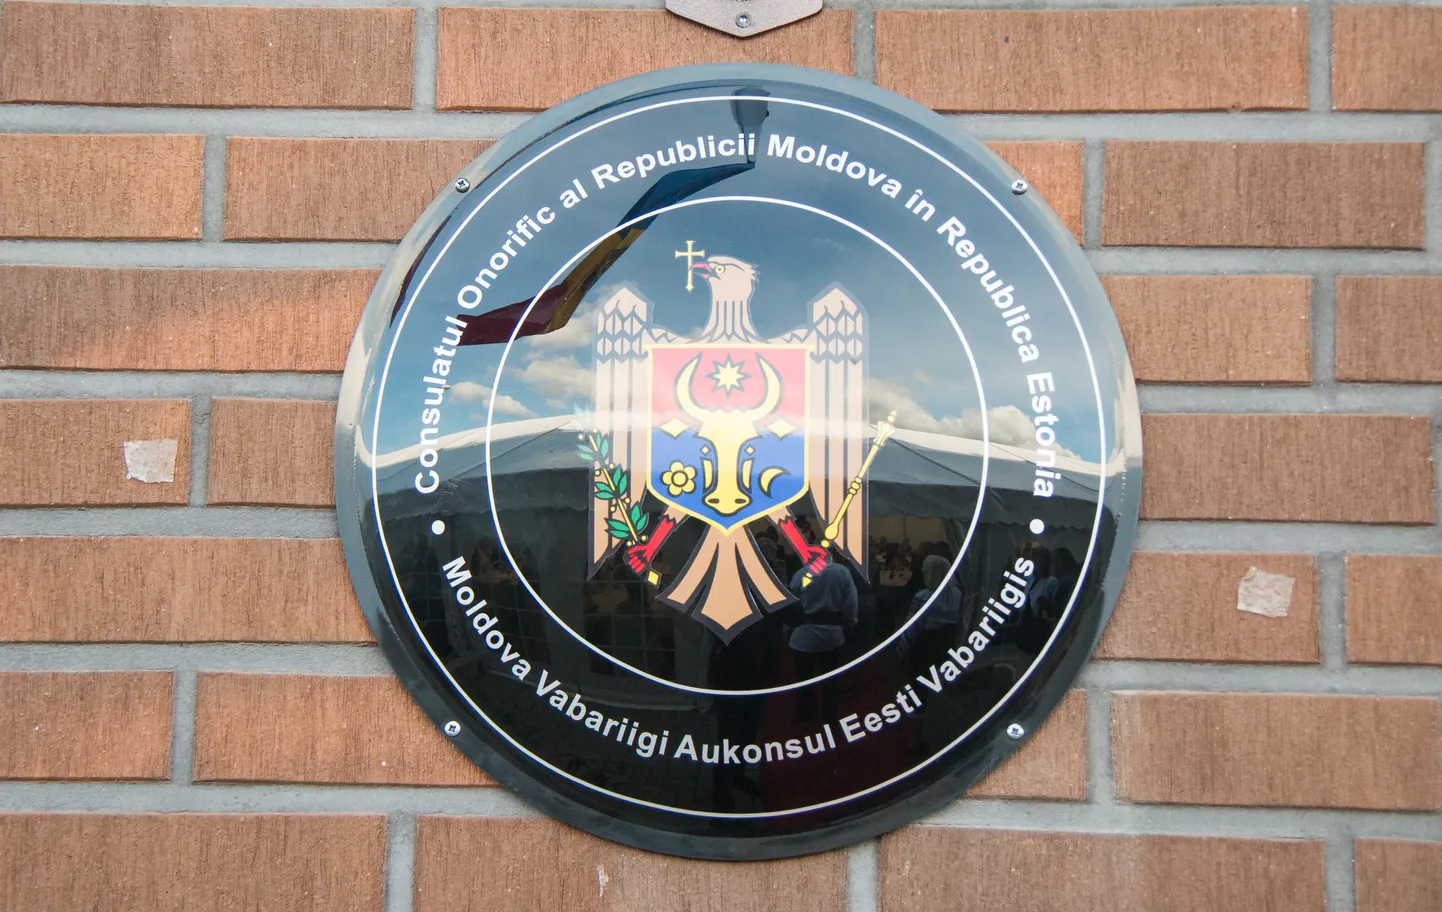 6.septembril 2016 avati Lääne-Virumaal Kundas Moldova aukonsulaat. Moldoval on ka saatkond Tallinnas ja aukonsulaat Tartus.